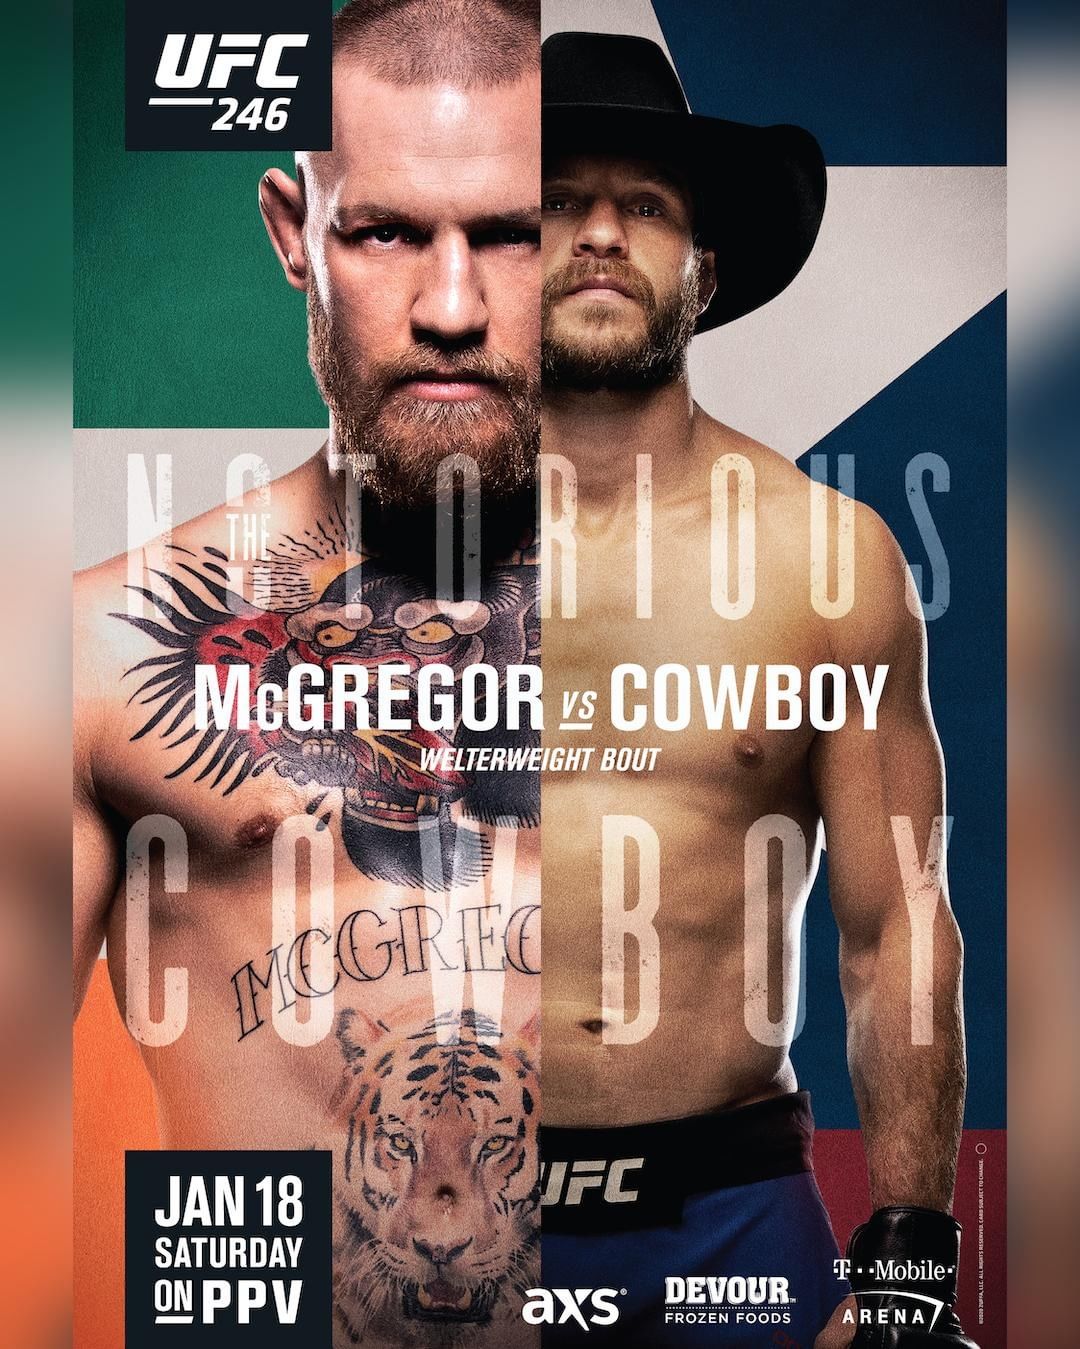 WATCH: Conor McGregor Talks Donald Cerrone, UFC 246, Future Opponents, & What's Next